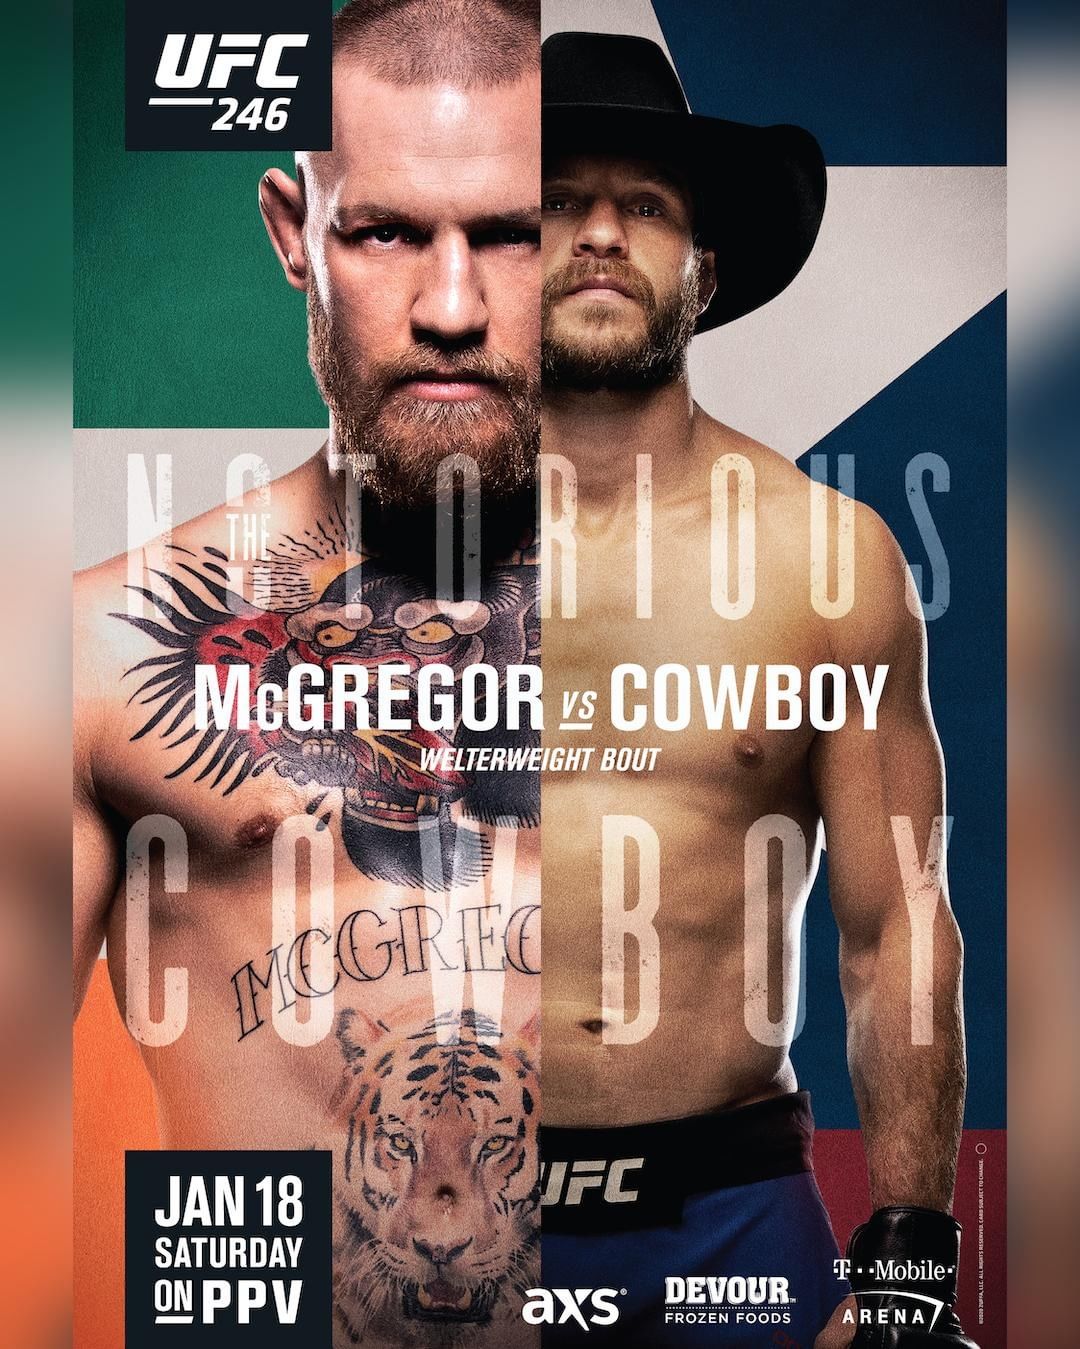 WATCH: Conor McGregor Talks Donald Cerrone, UFC 246, Future Opponents, & What's Next